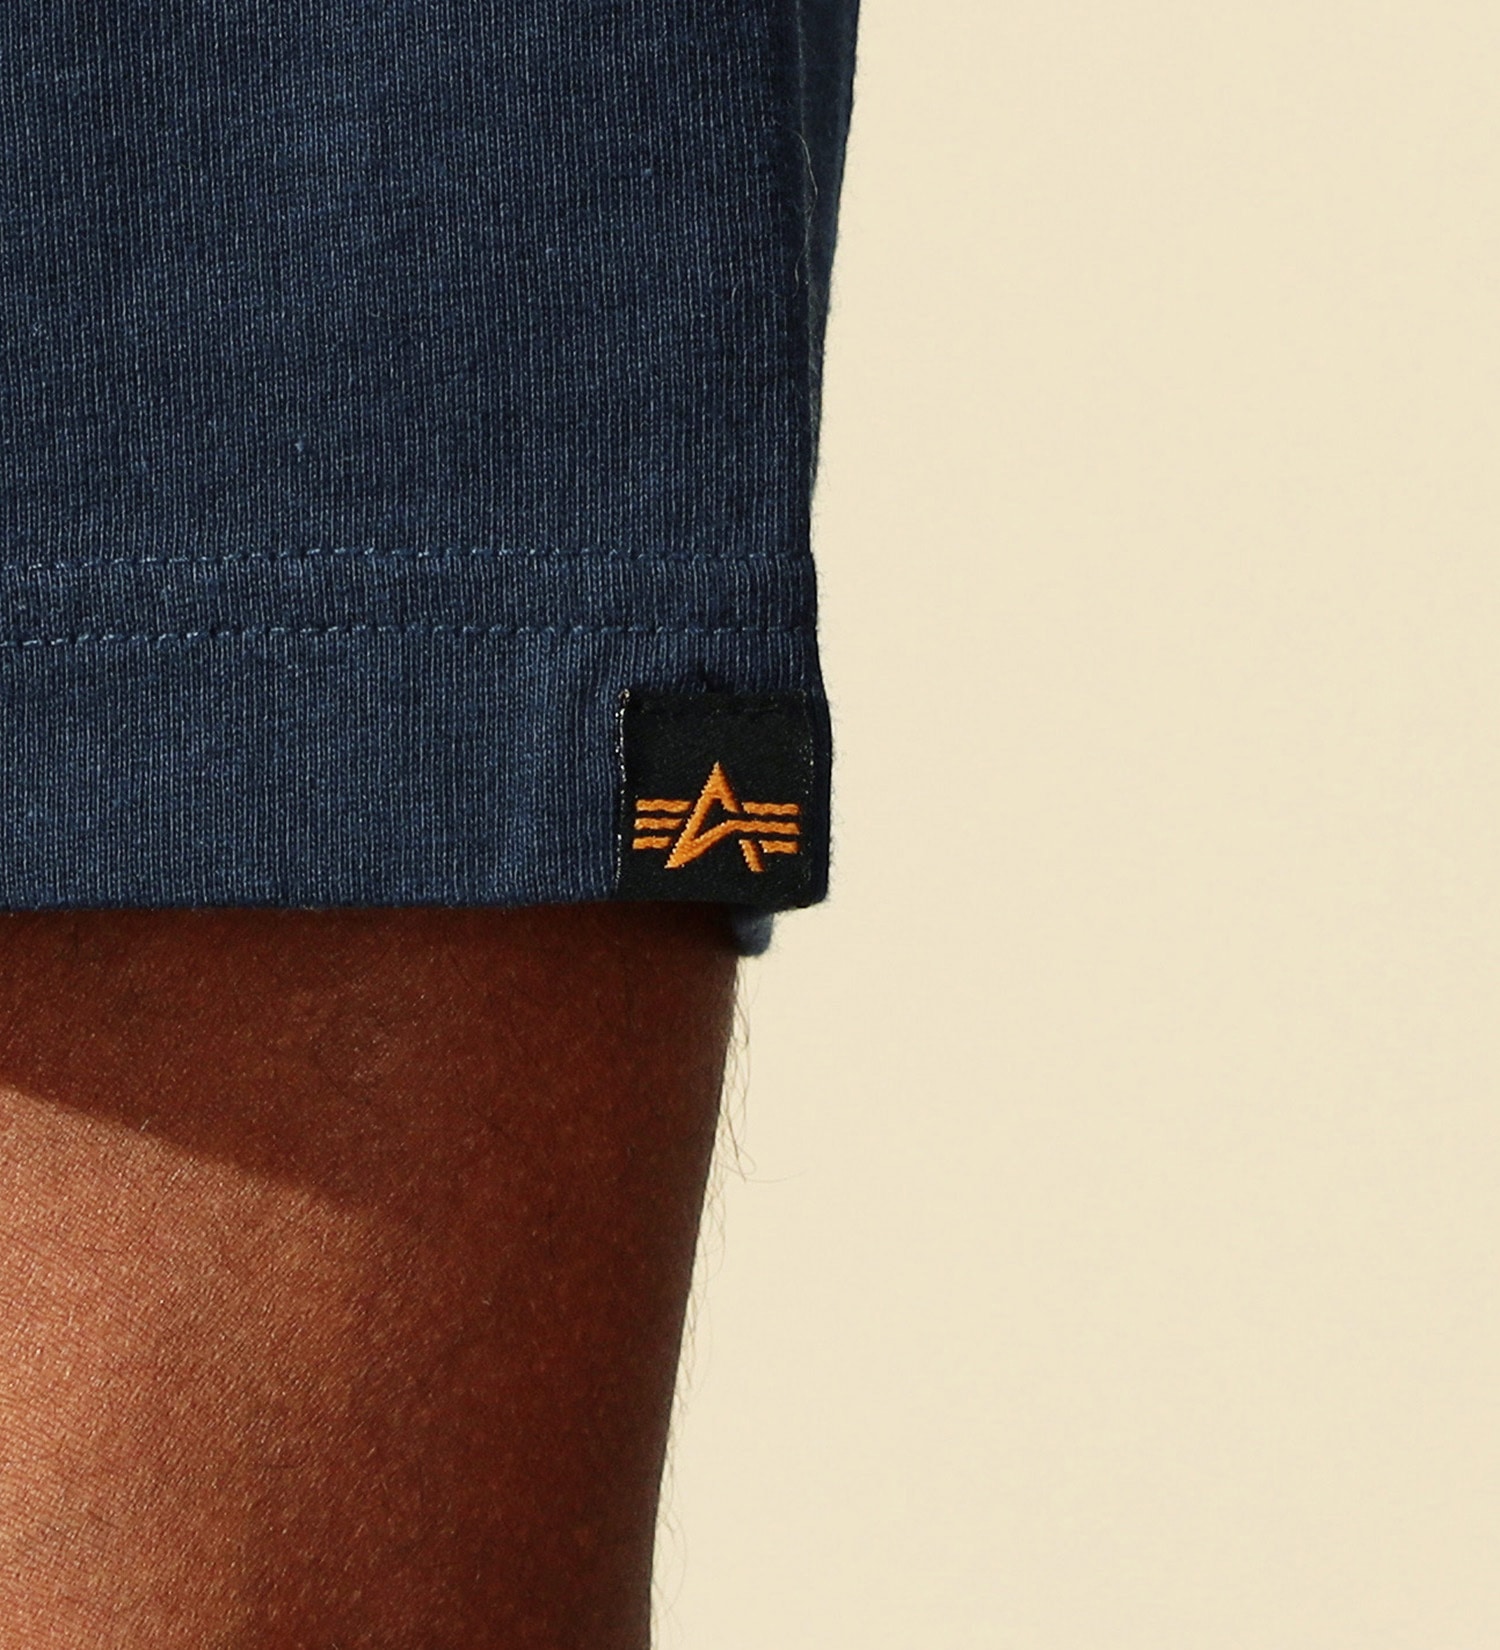 ALPHA(アルファ)のAマークロゴプリントTシャツ 半袖|トップス/Tシャツ/カットソー/メンズ|ネイビー